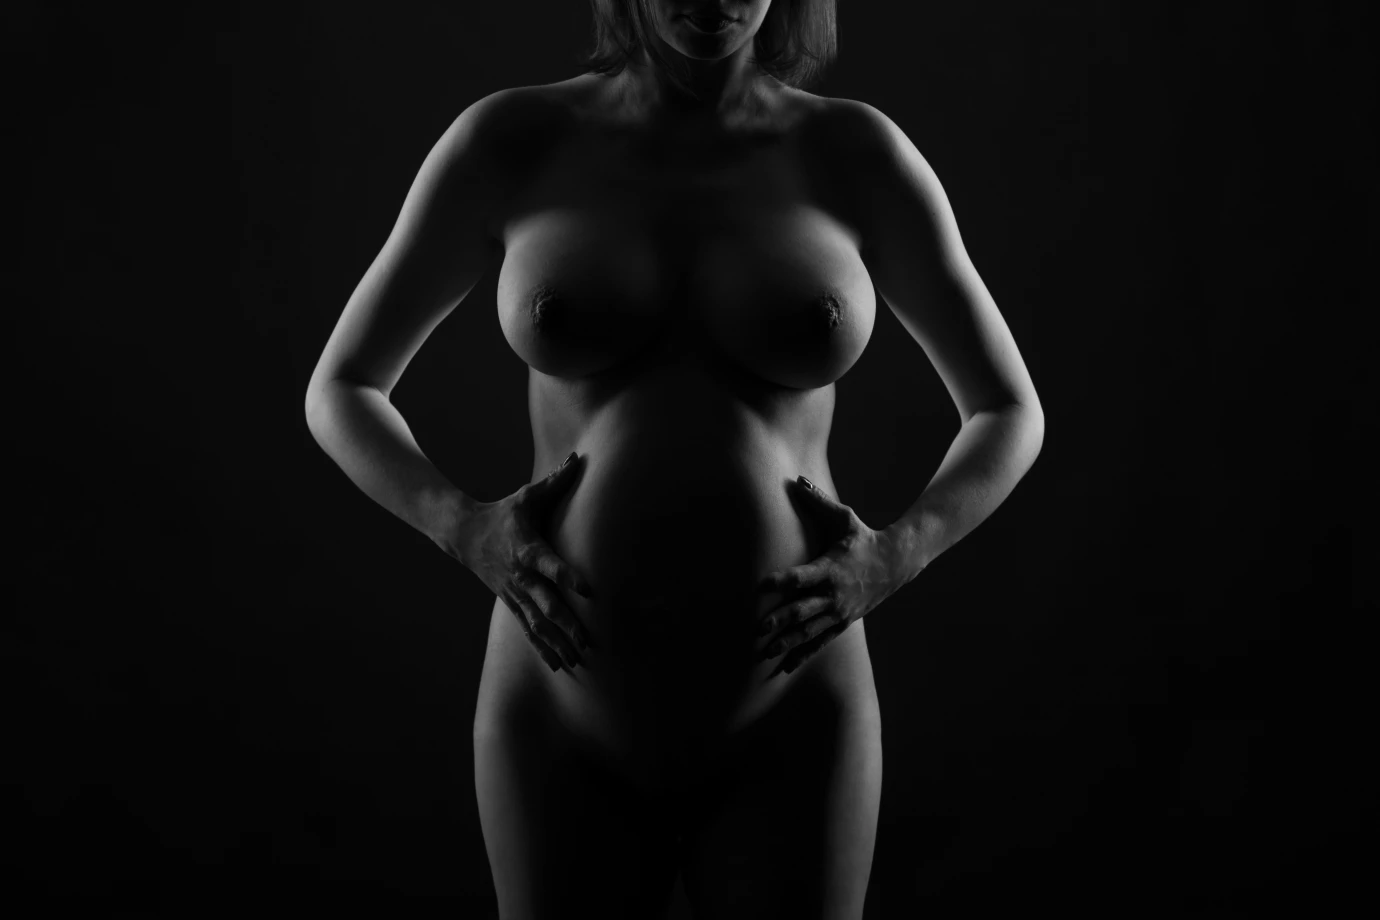 fotograf warszawa robert-wroblewski portfolio nagie zdjecia aktu nude